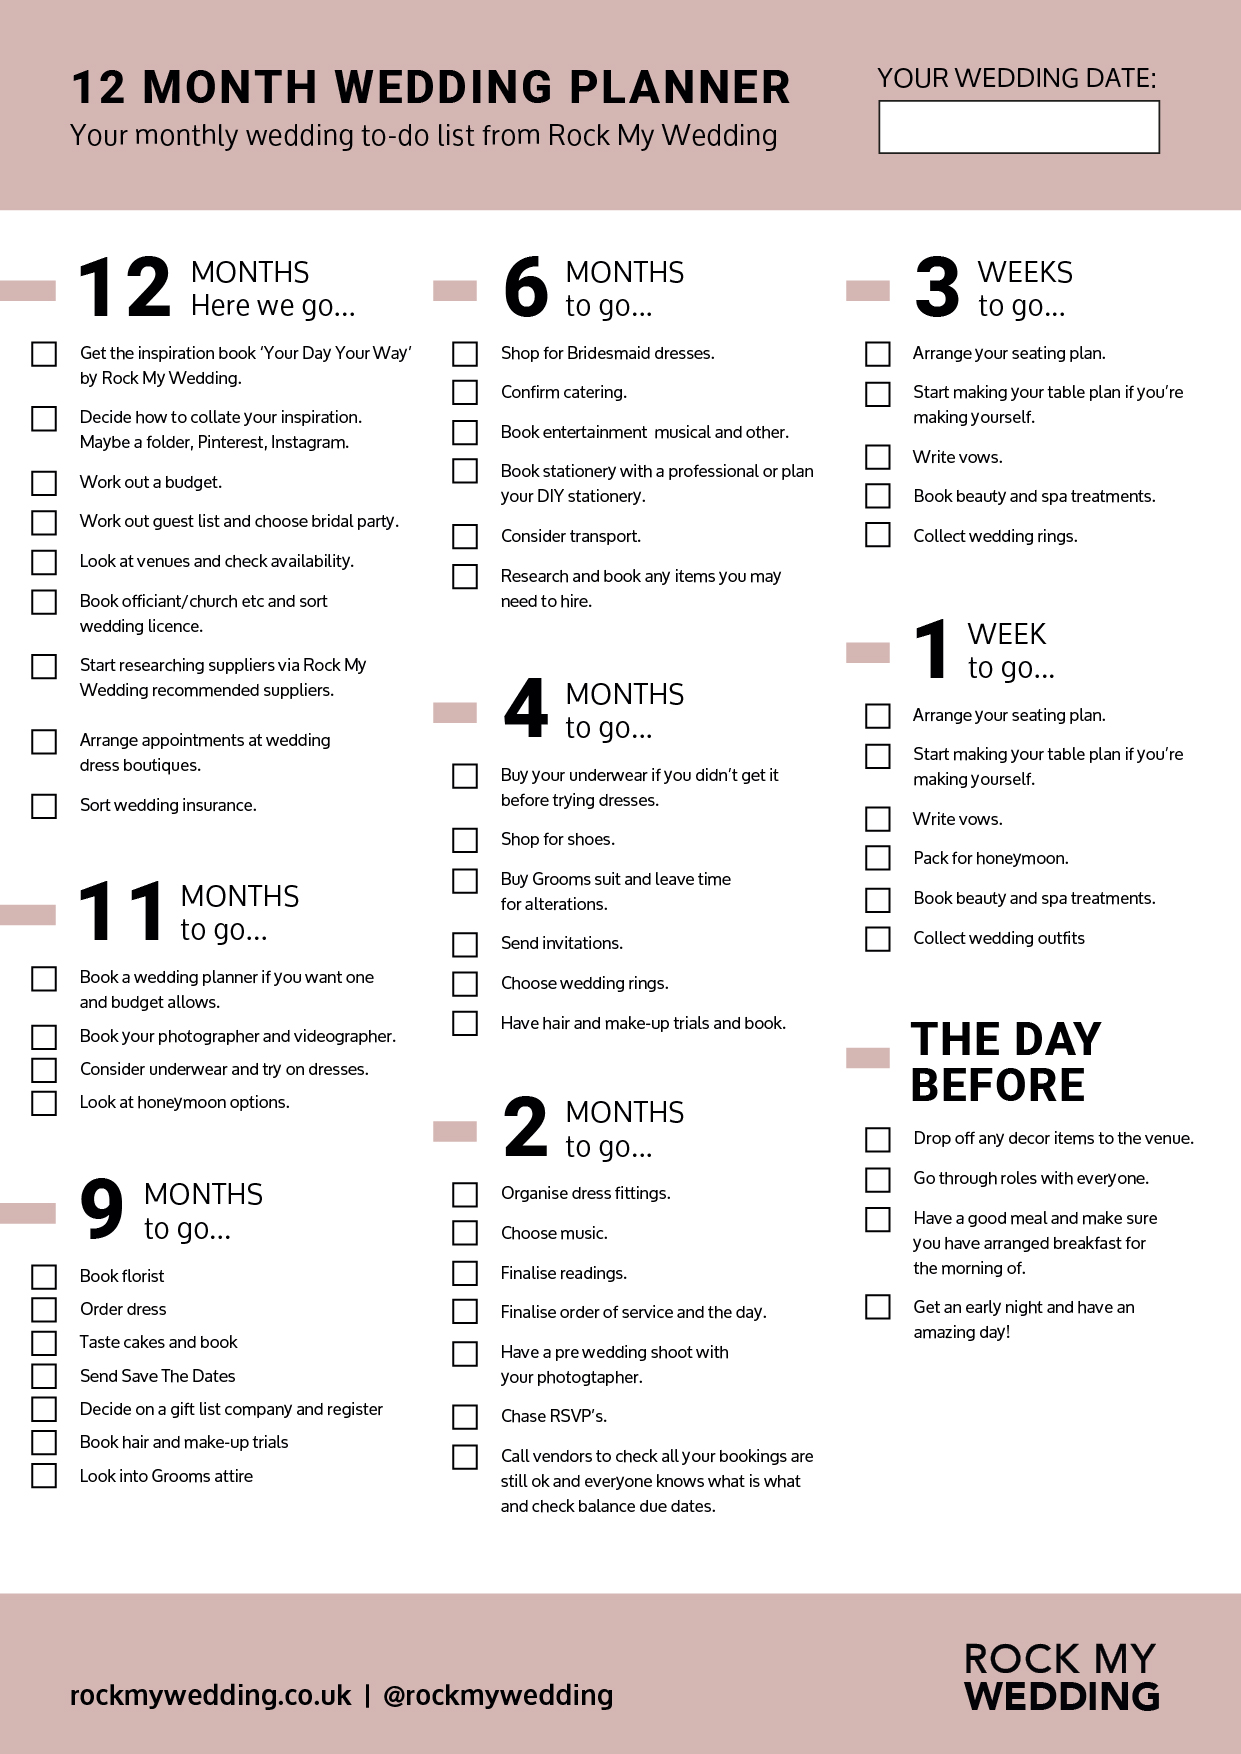 12-month-wedding-checklist-for-planning-your-wedding-day